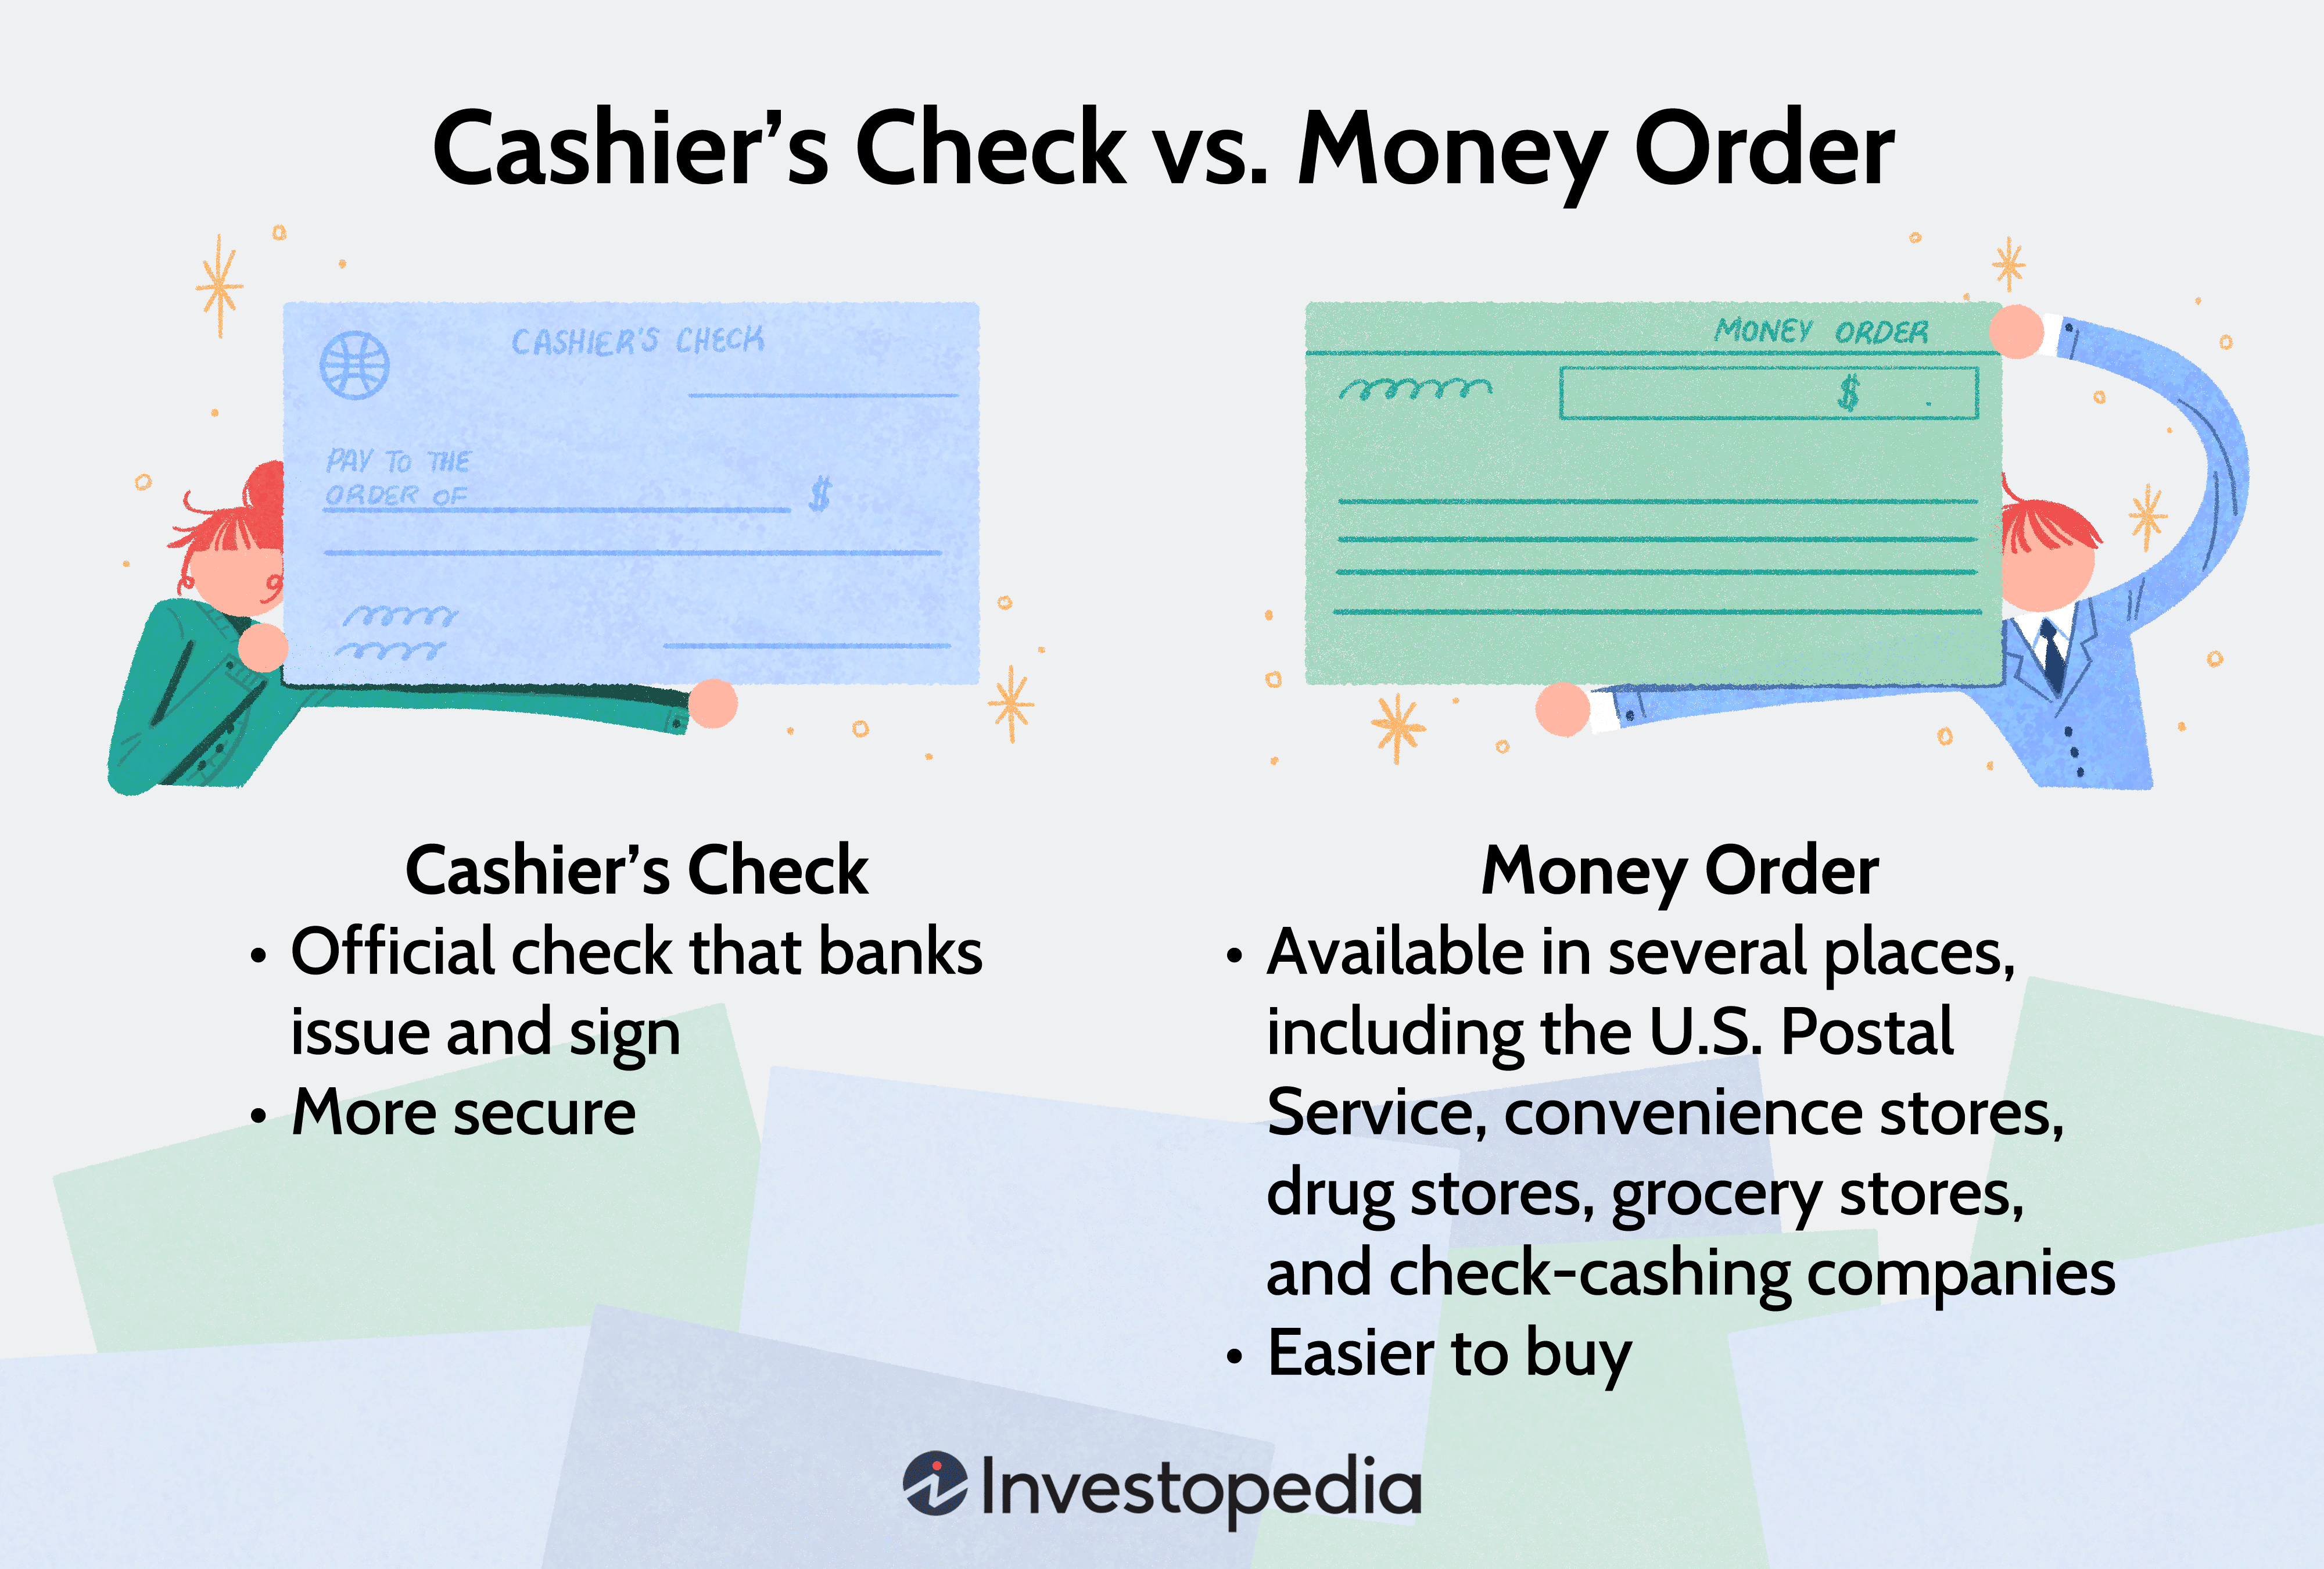 Cashierâs Check vs. Money Order